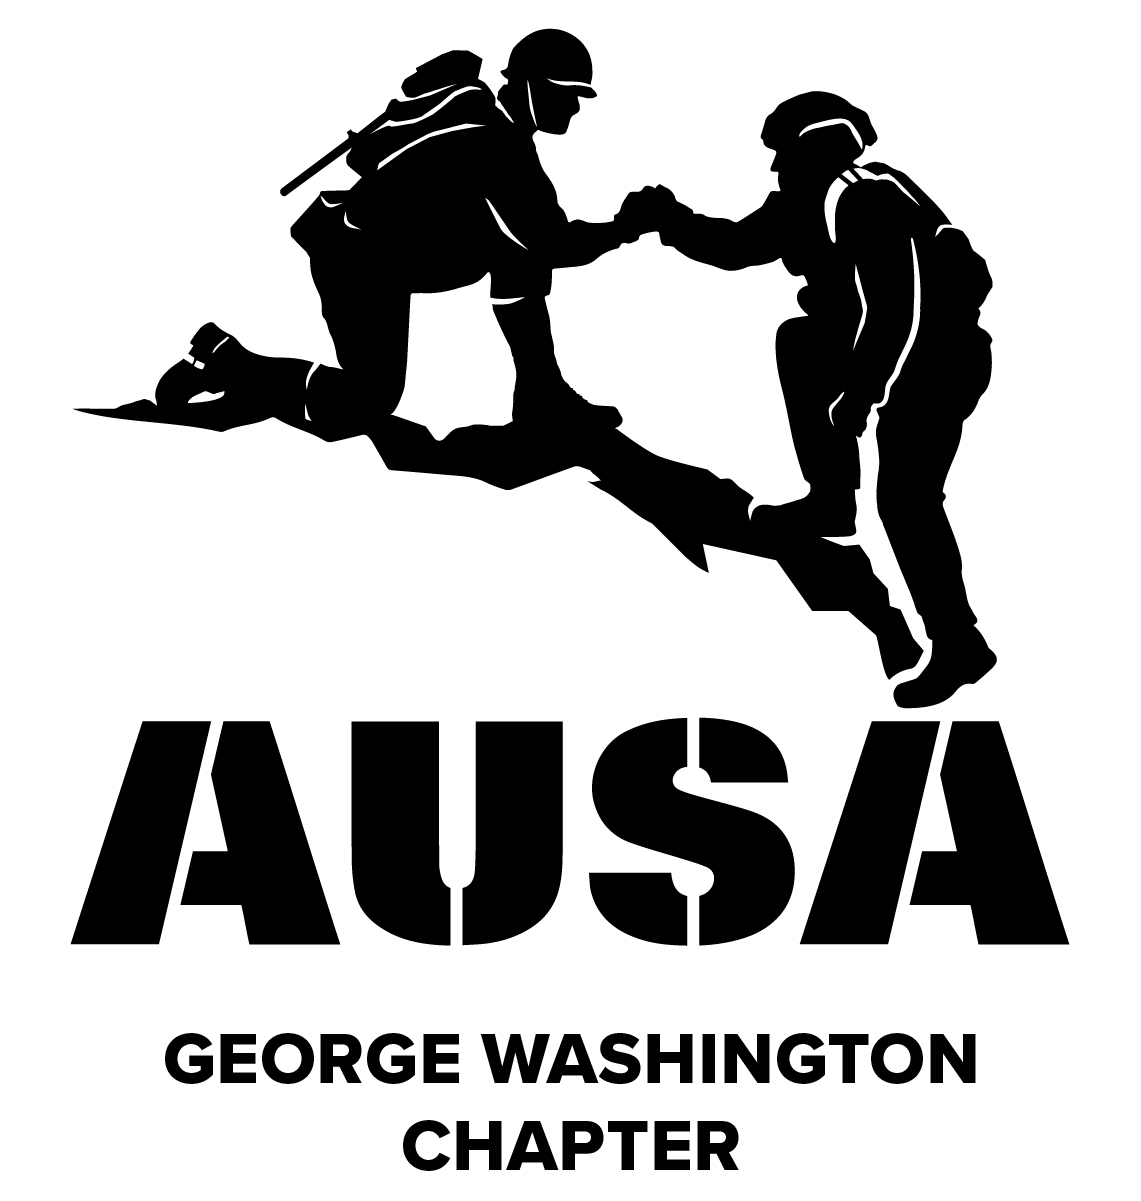 AUSA - George Washington Chapter